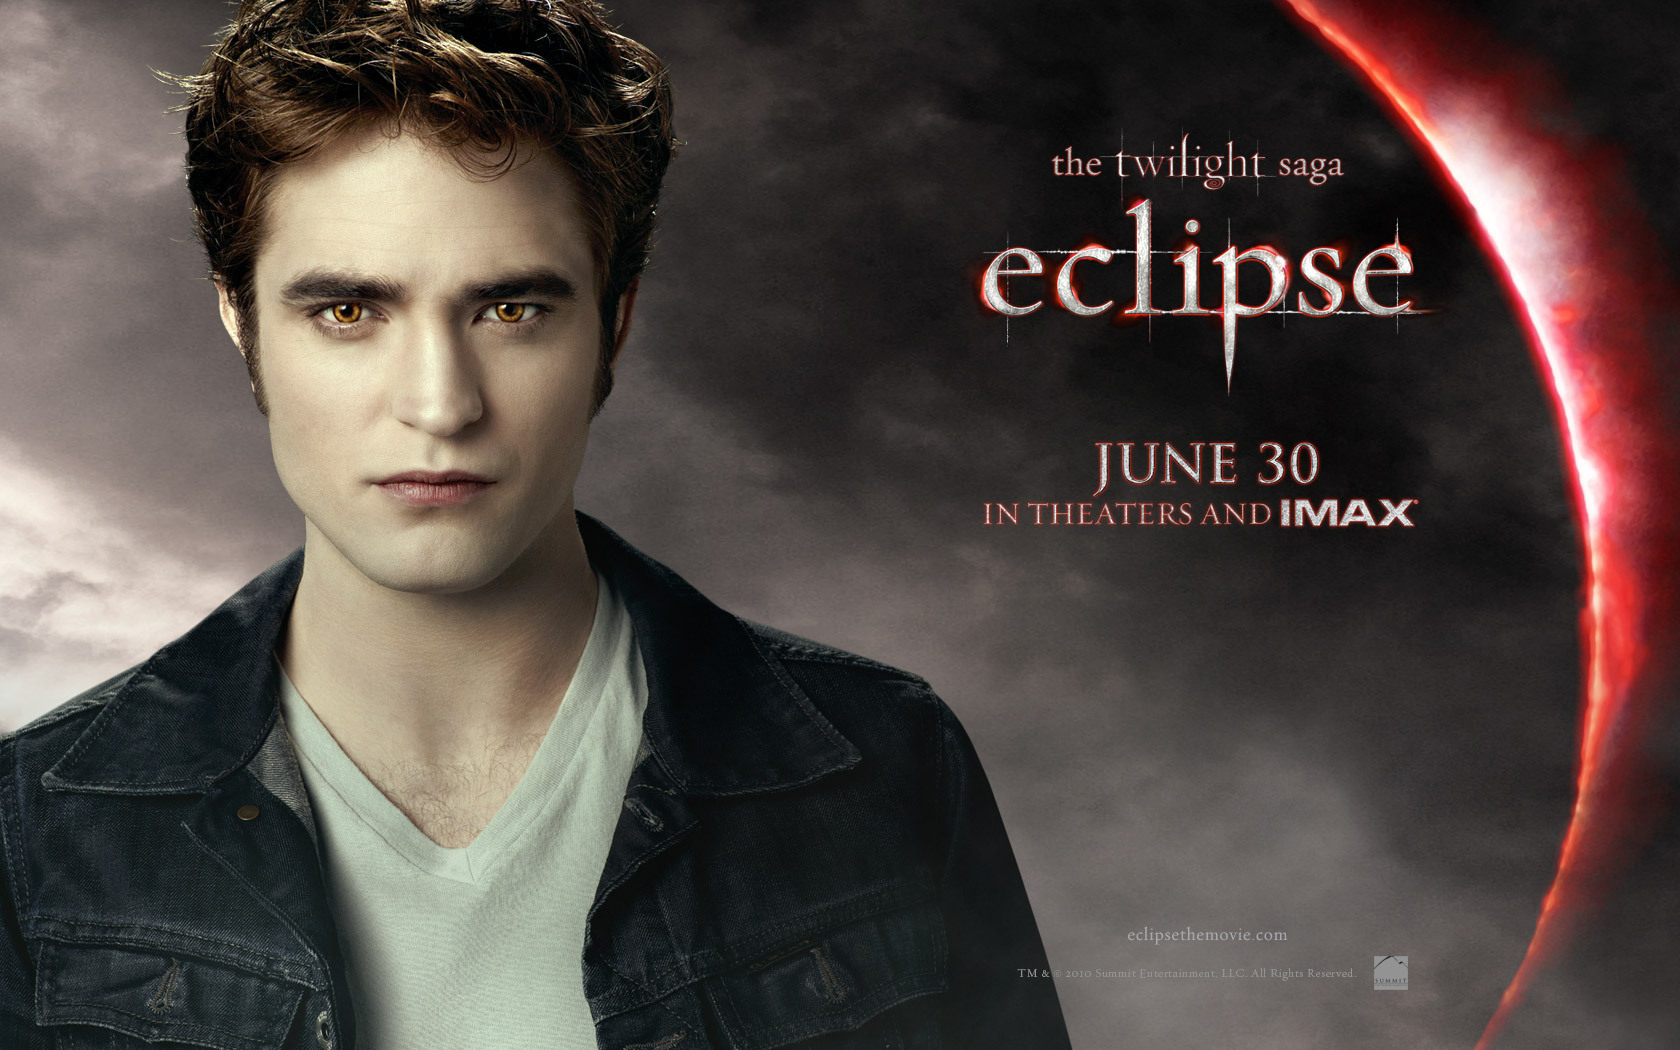   Twilight Saga Eclipse HD wallpaper and background photos 13260241 1680x1050